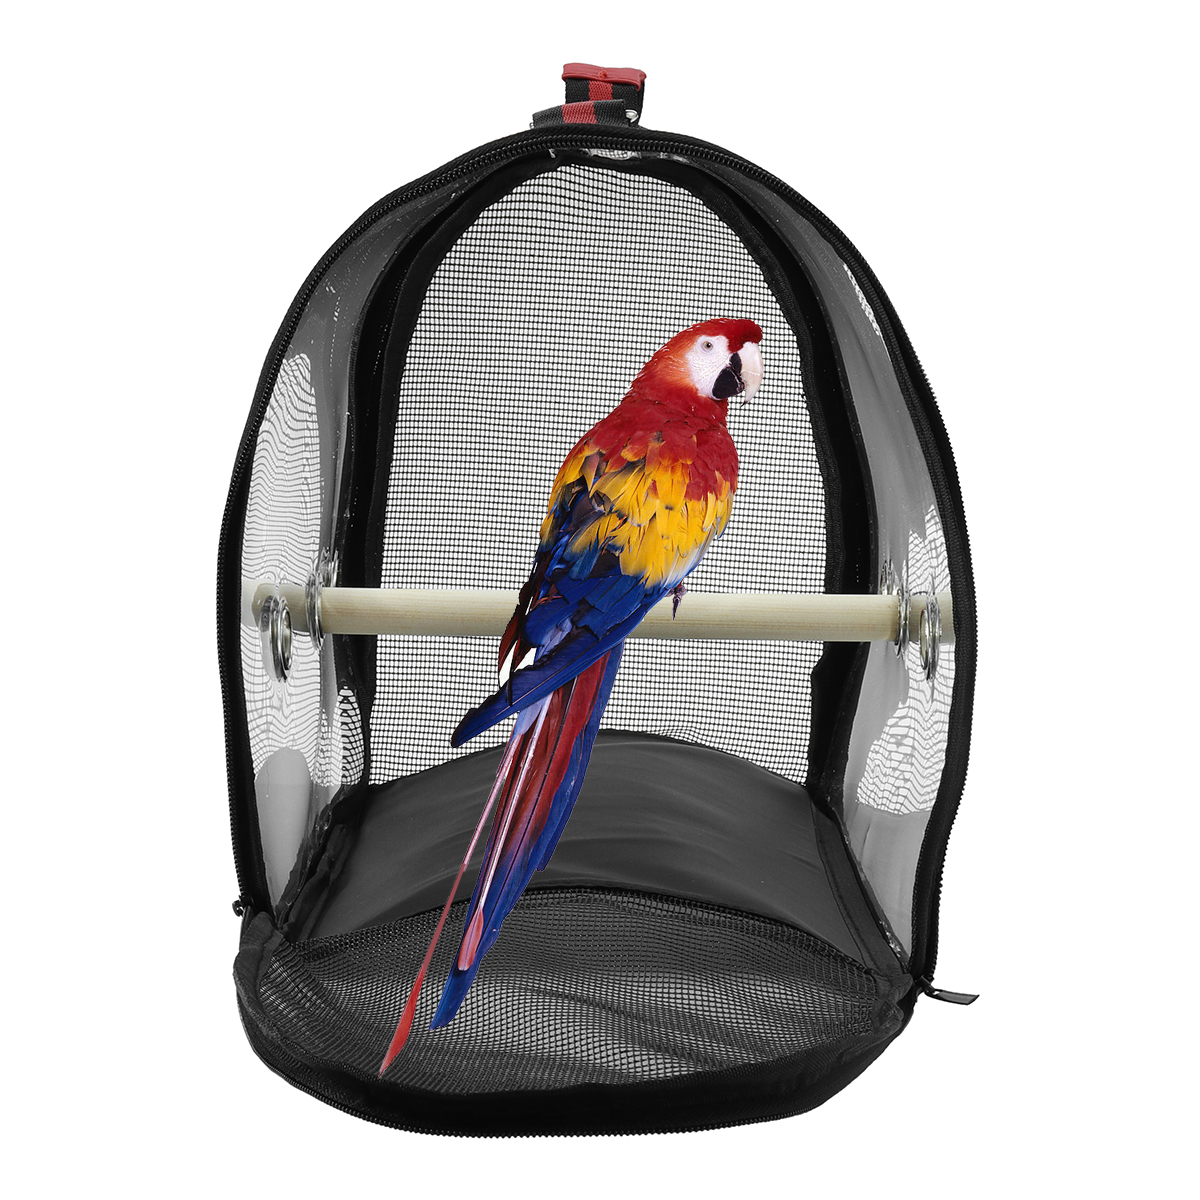 Outdoor-Bird-Shoulder-Bags-Portable-Parrot-Carry-Cage-Pet-Breathable-Space-Pet-Carrier-Bag-1631543-6